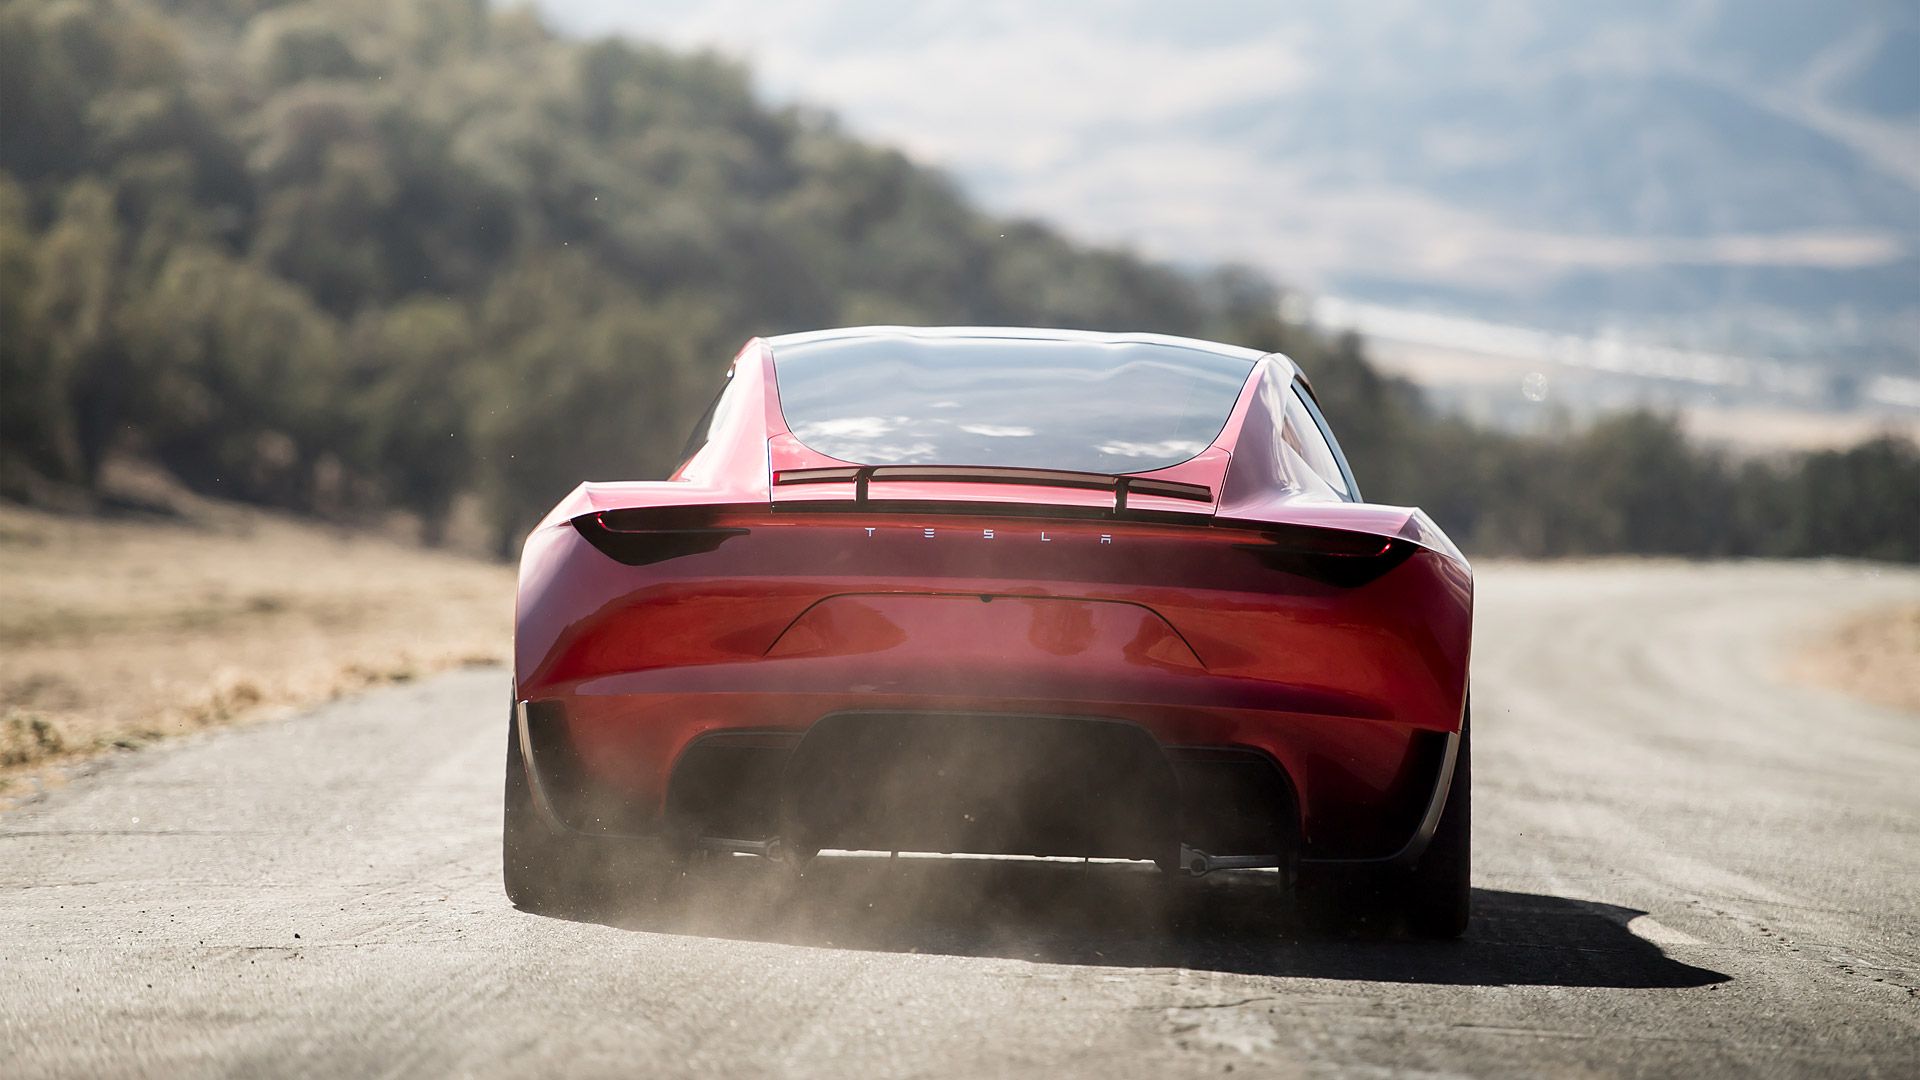 Tesla Roadster Wallpaper, Specs & Videos